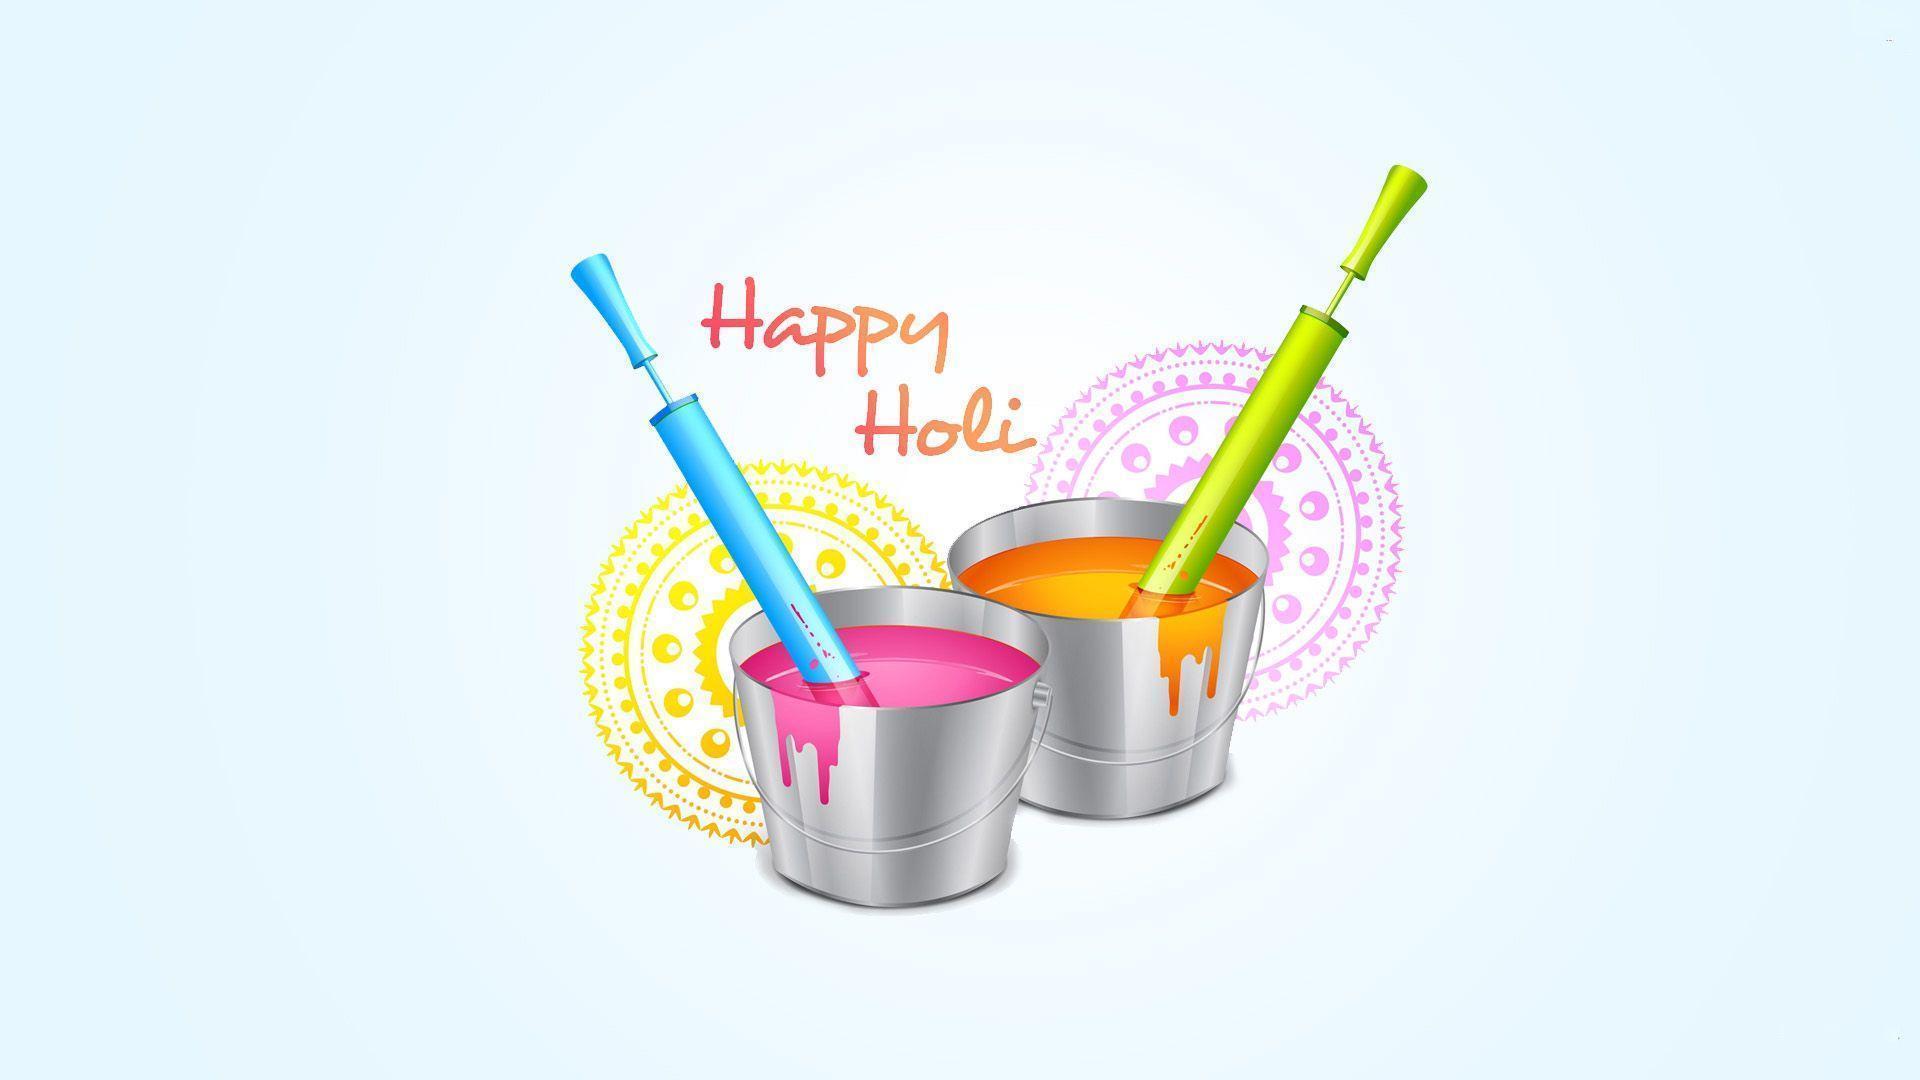 Happy Holi. HD Wallpaper Image Picture Desktop Background Photo